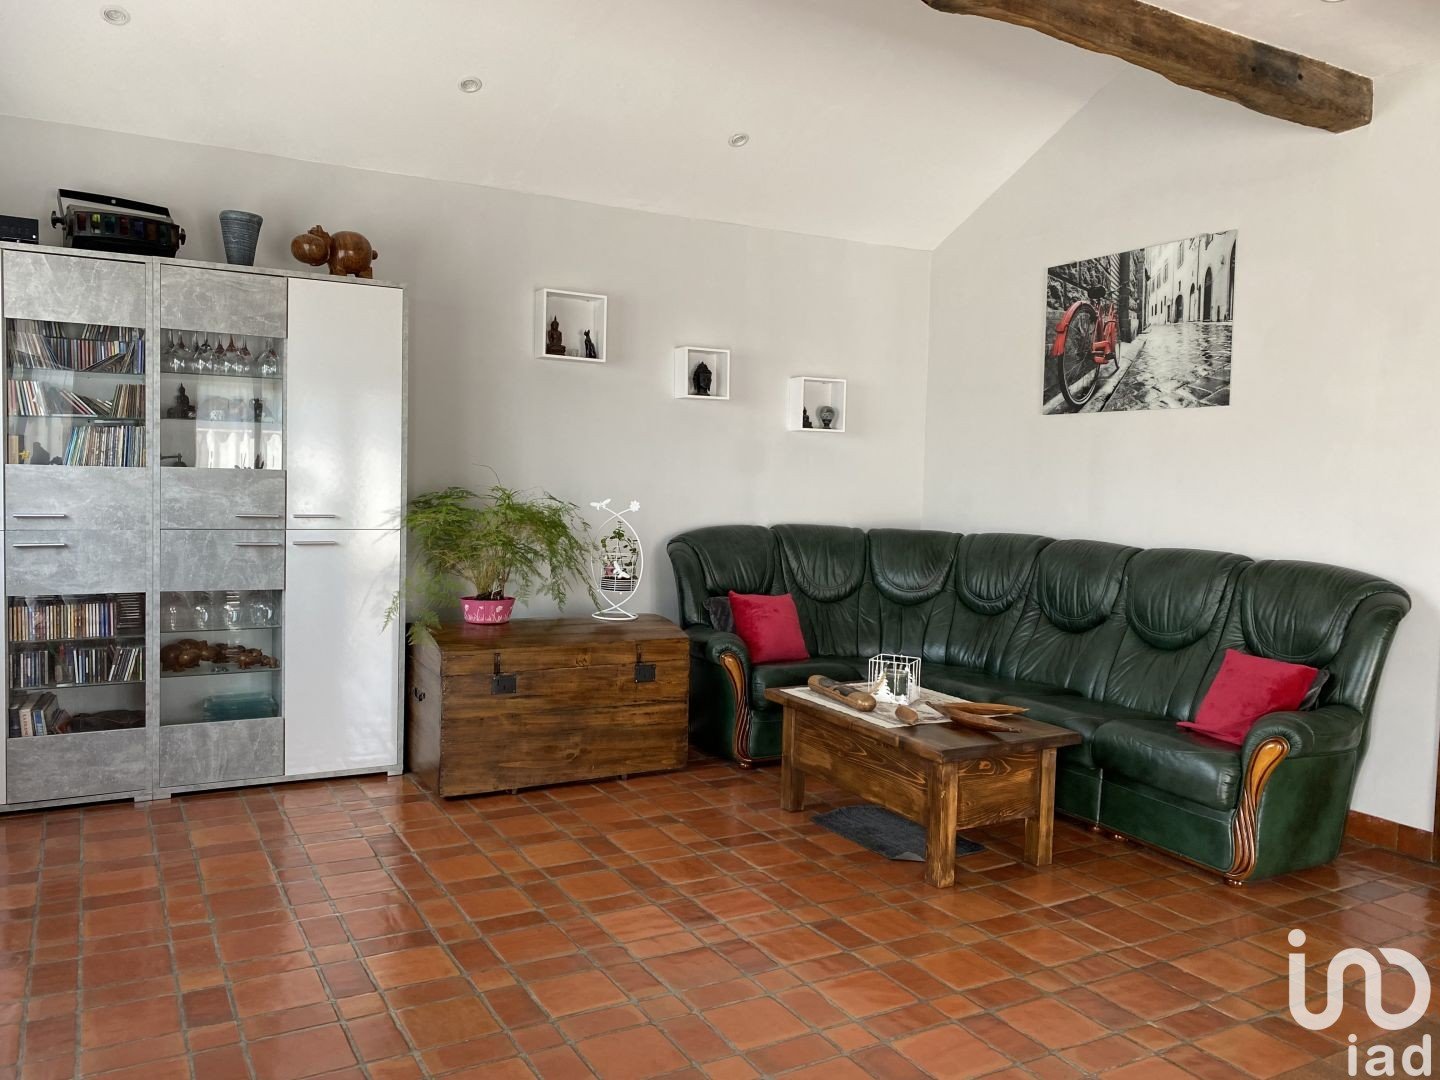 Maison a louer herblay - 6 pièce(s) - 144 m2 - Surfyn